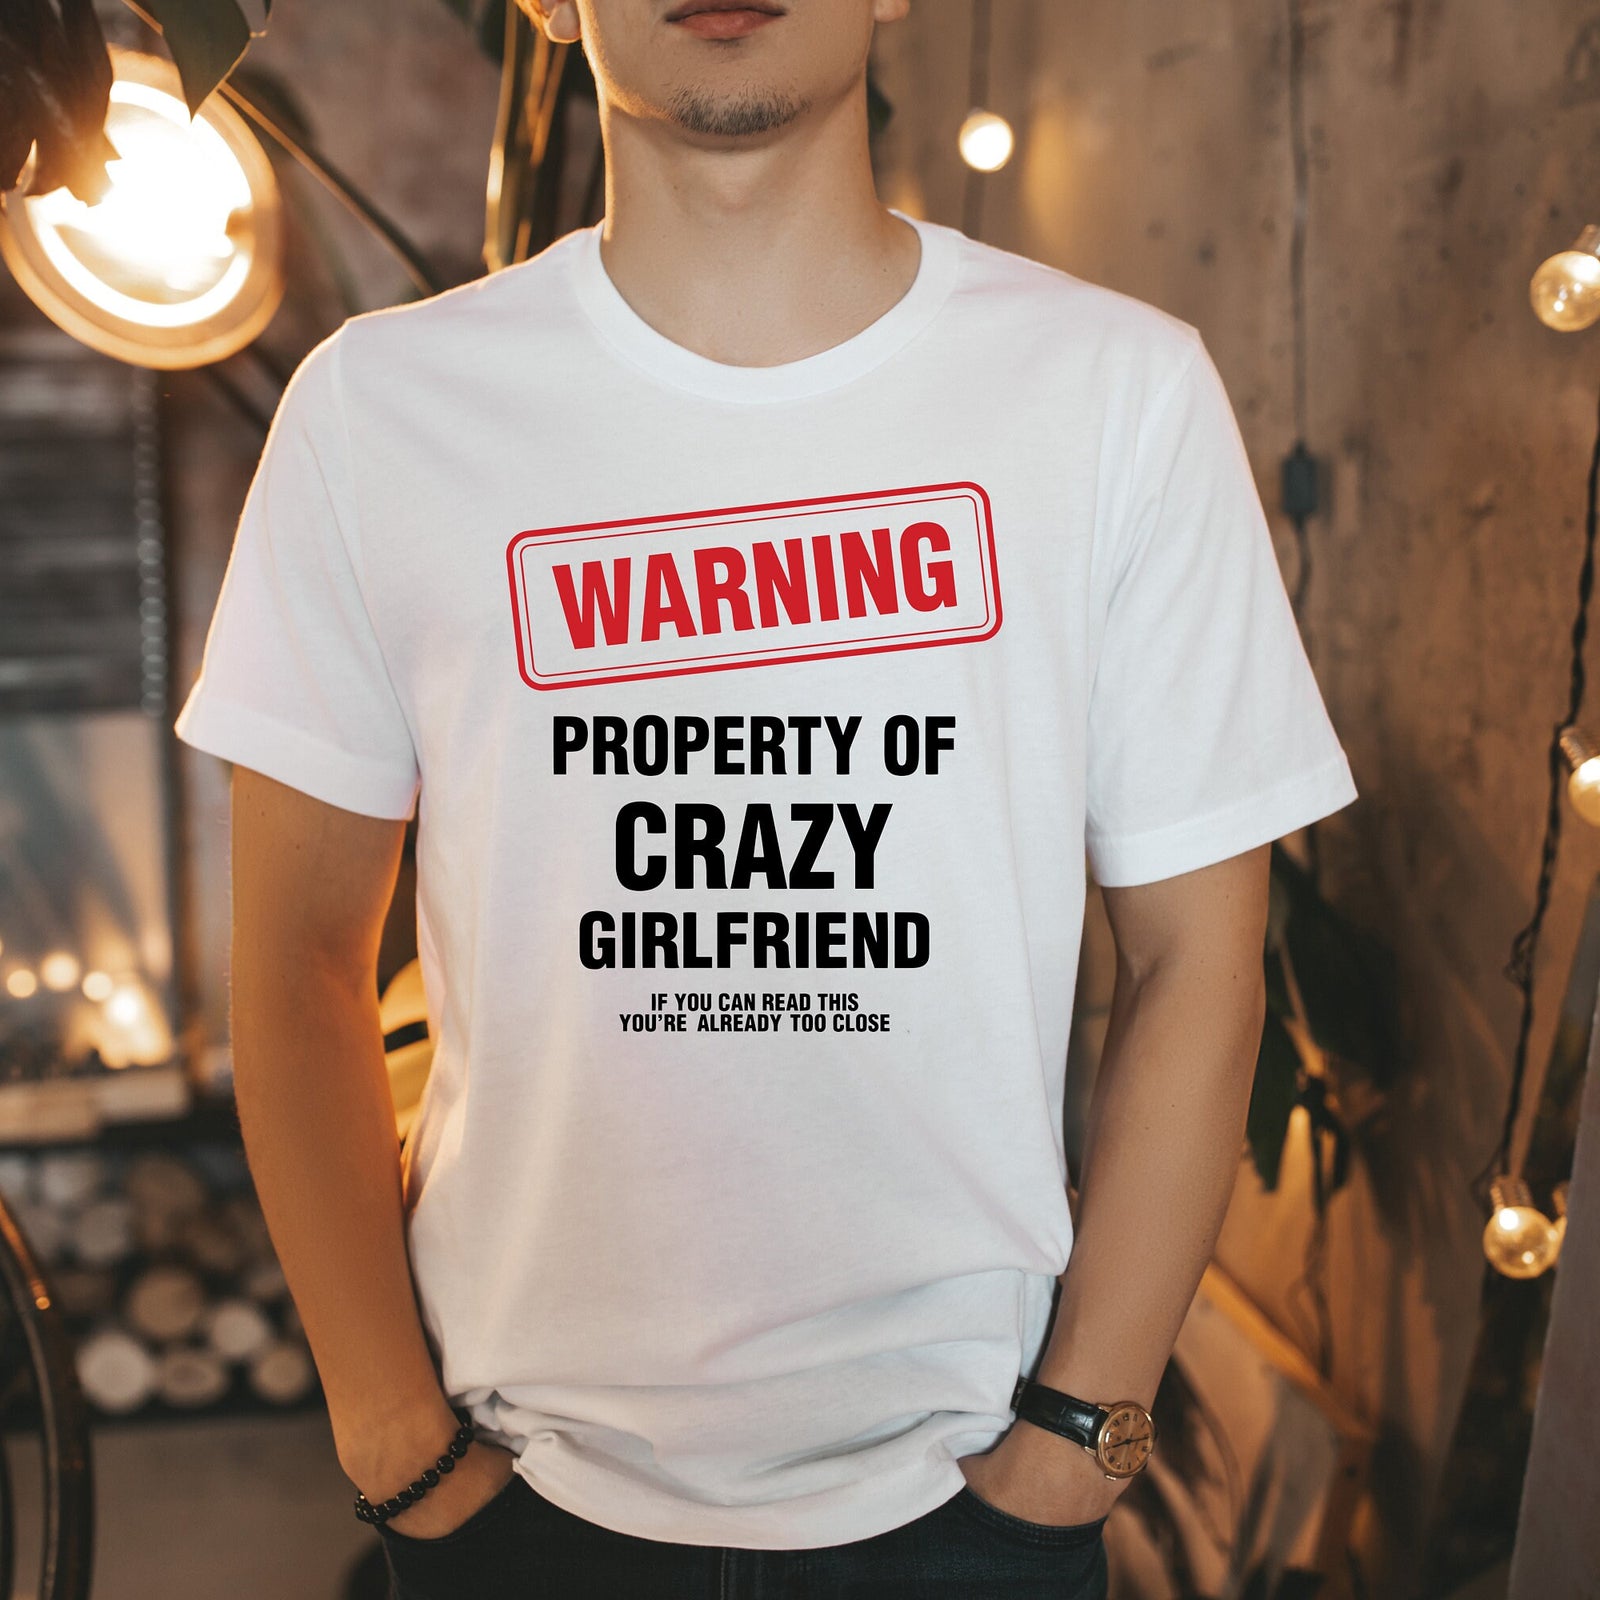 Warning Property of a Crazy Girlfriend Funny Statement Shirt- Funny Men's T-shirt - Girlfriend Humor T-shirts - Boyfriend Gift Idea Shirt